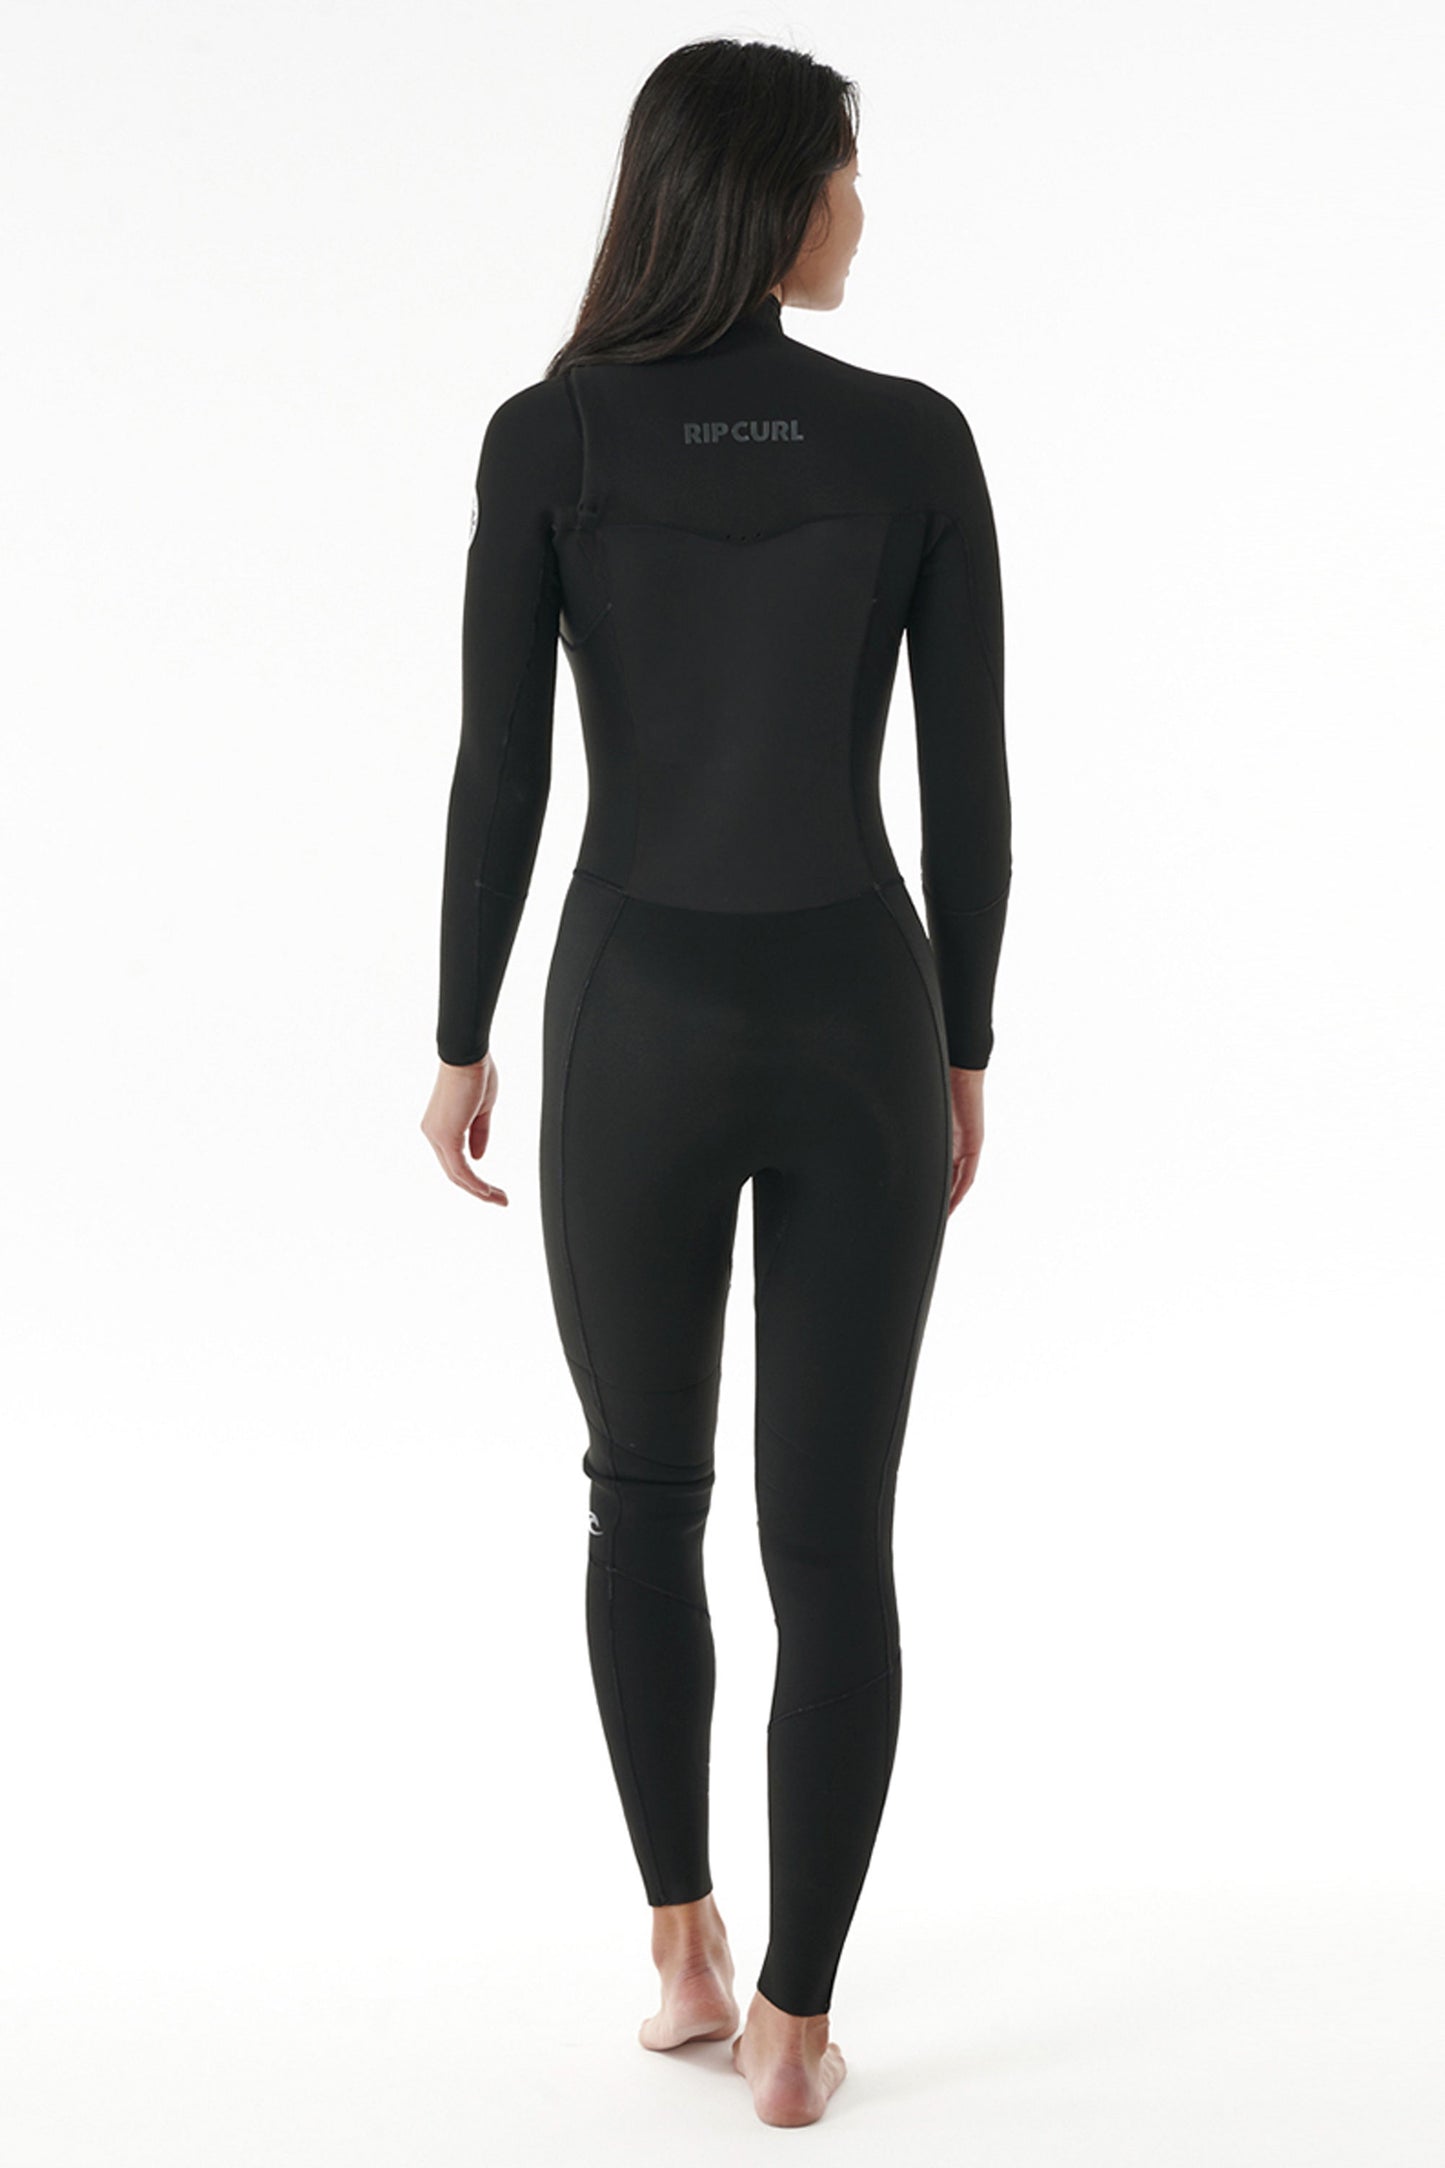 Pukas-Surf-Shop-Rip-Curl-wetsuit-woman-dawn-patrol-4-3-zip-black